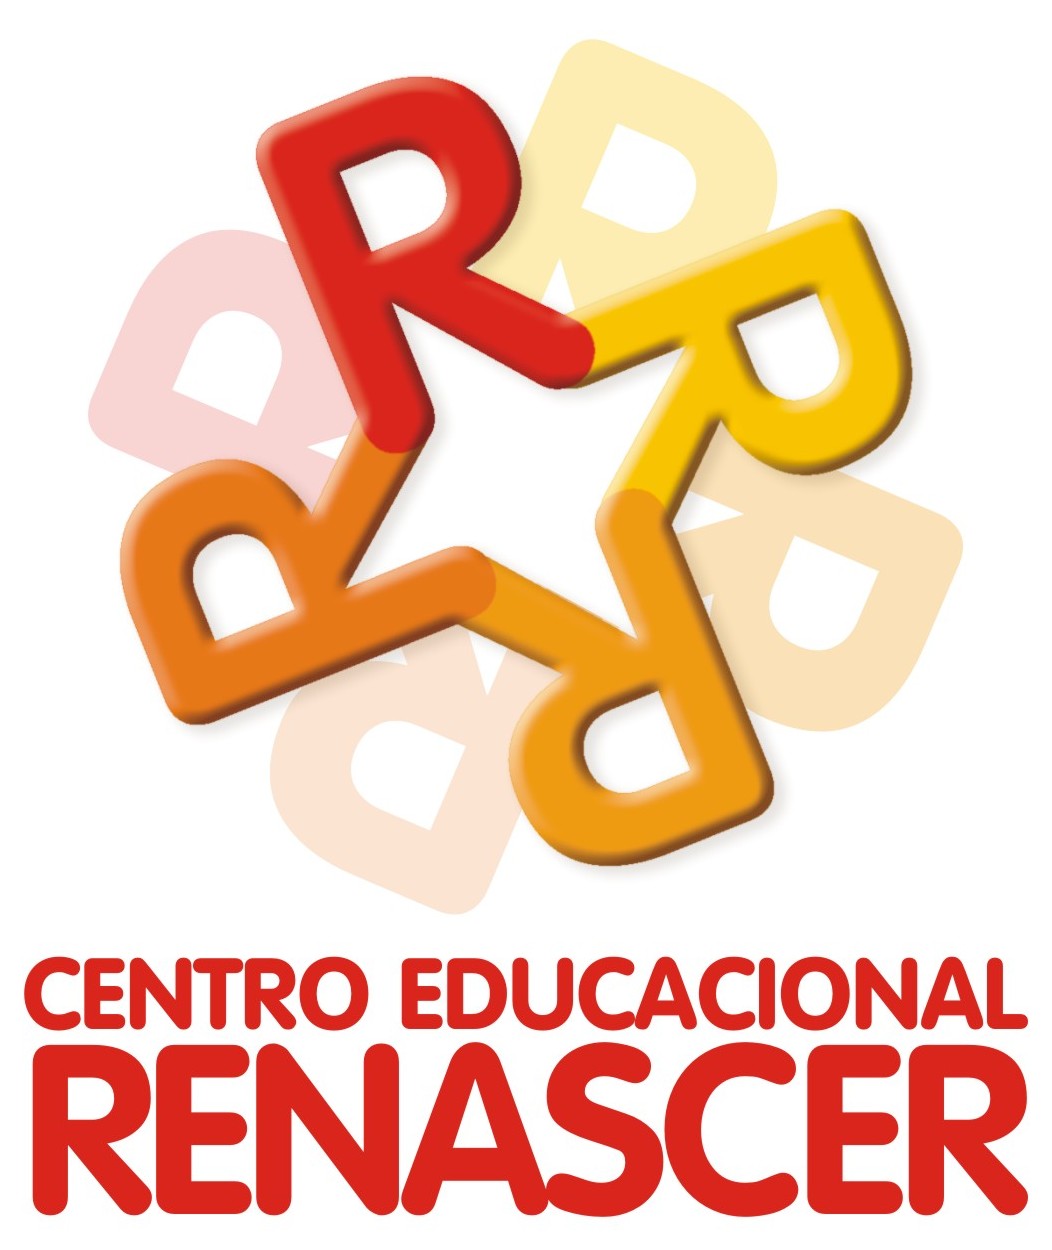 CENTRO EDUCACIONAL RENASCER